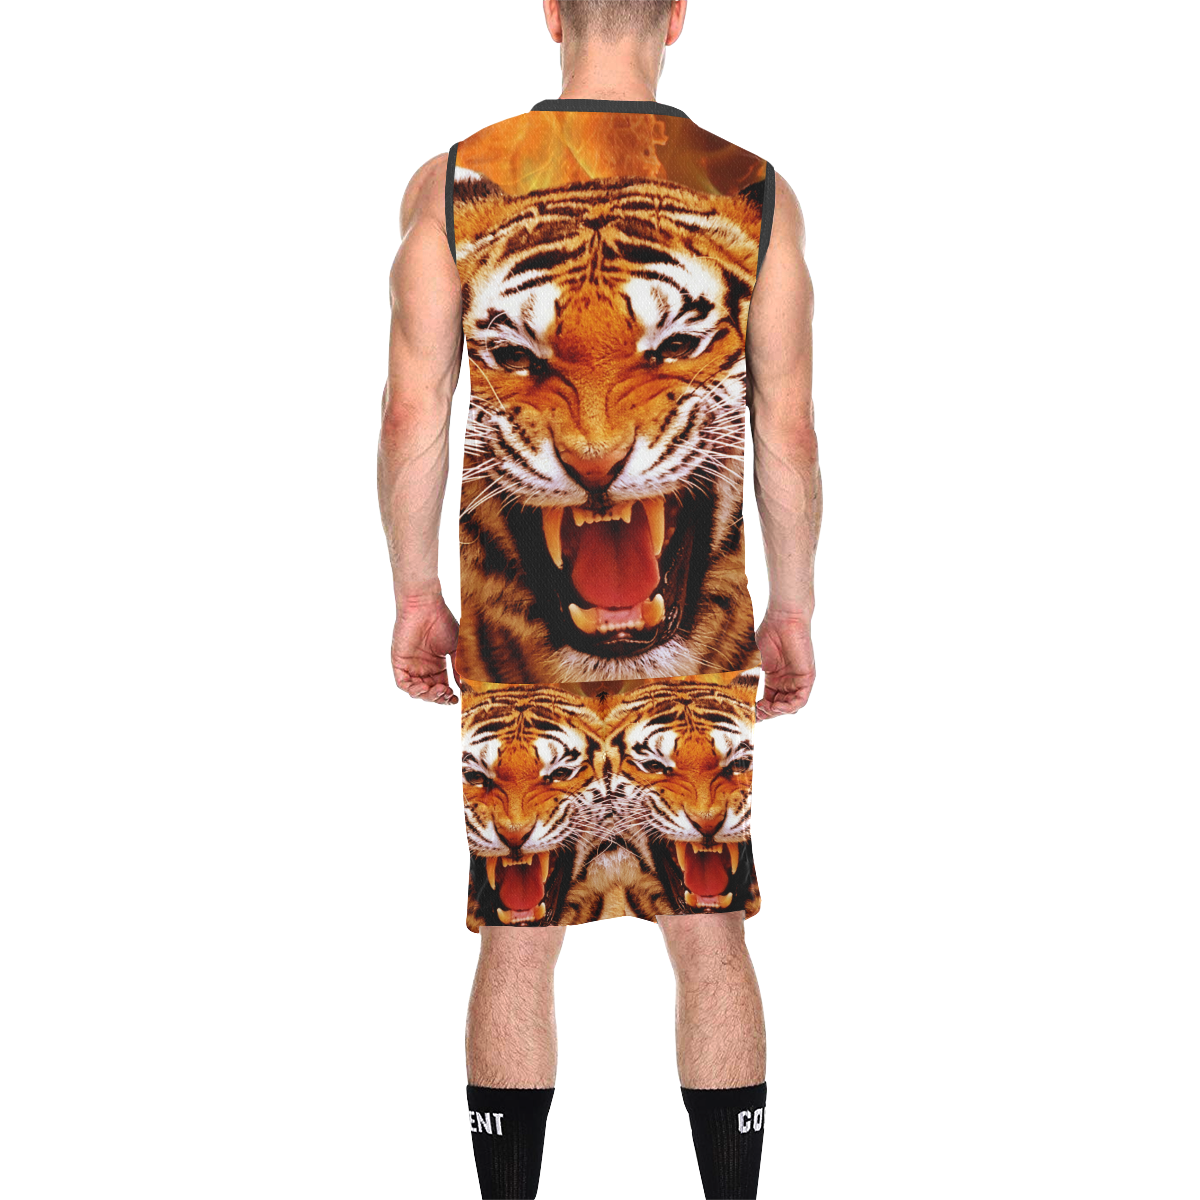 Tiger and Flame All Over Print Basketball Uniform